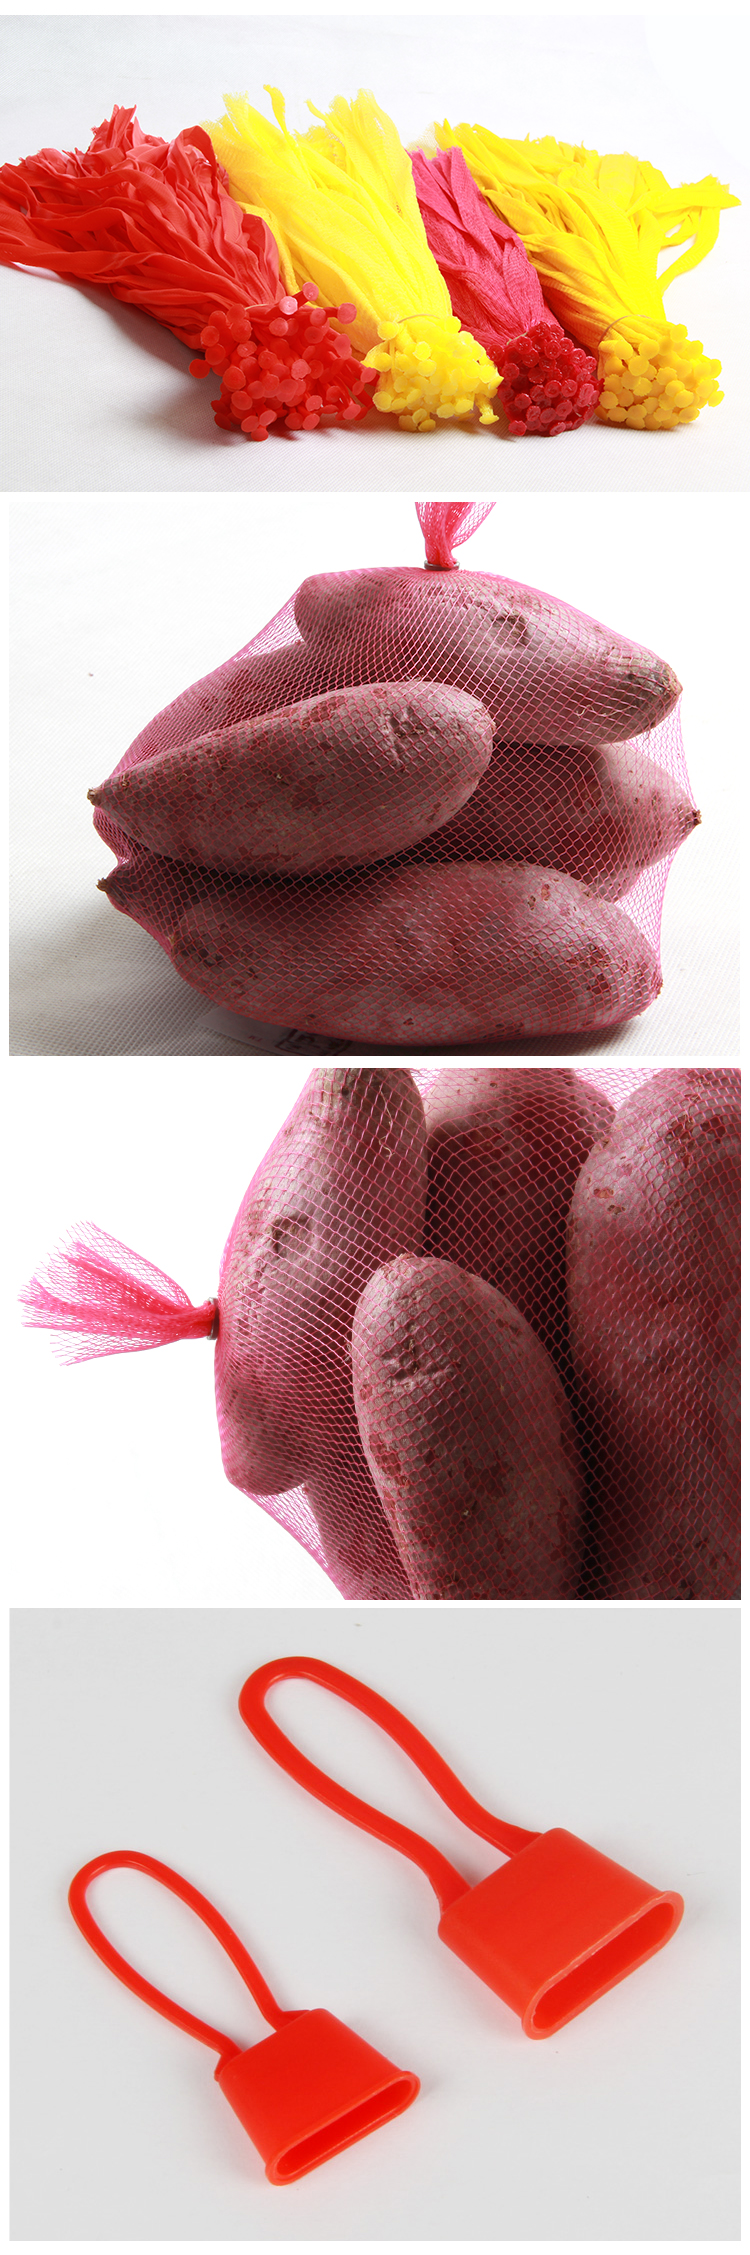 Customized purple potatoes mesh net bag for supermarkets